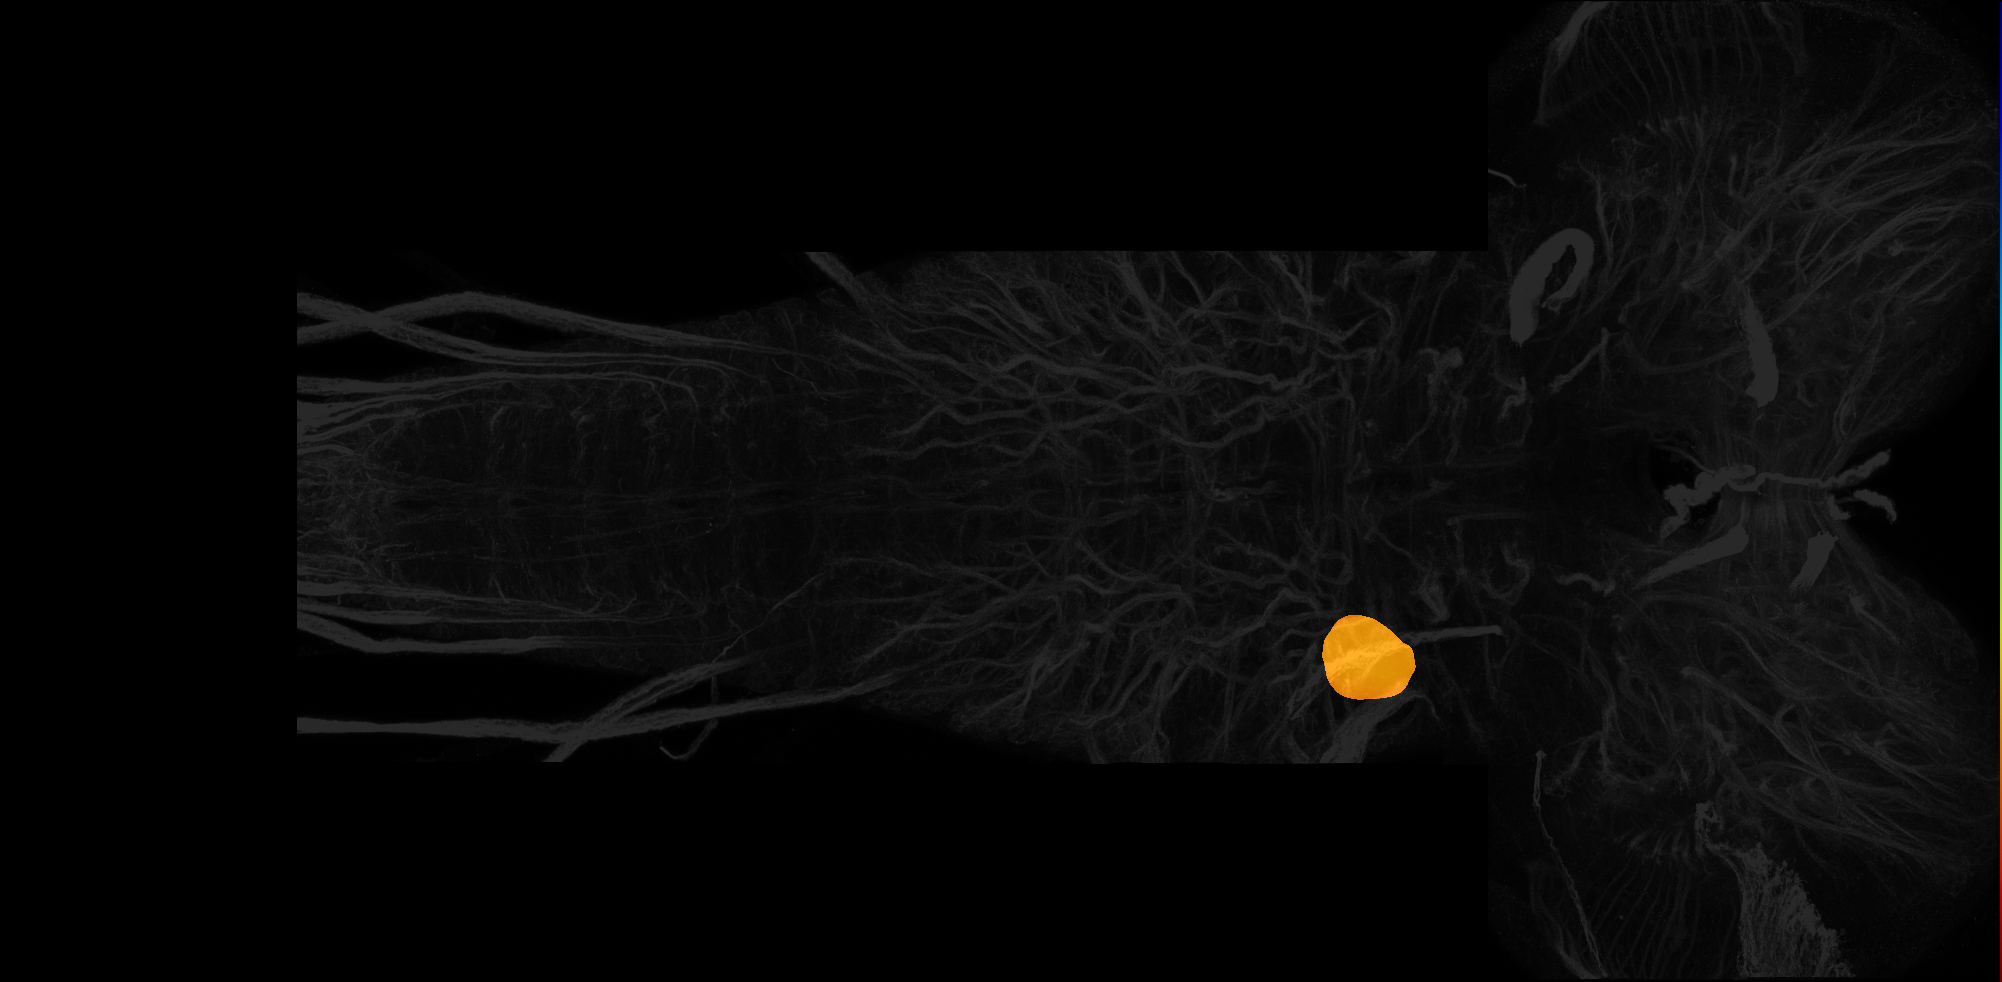 ventral nerve cord synaptic neuropil subdomain